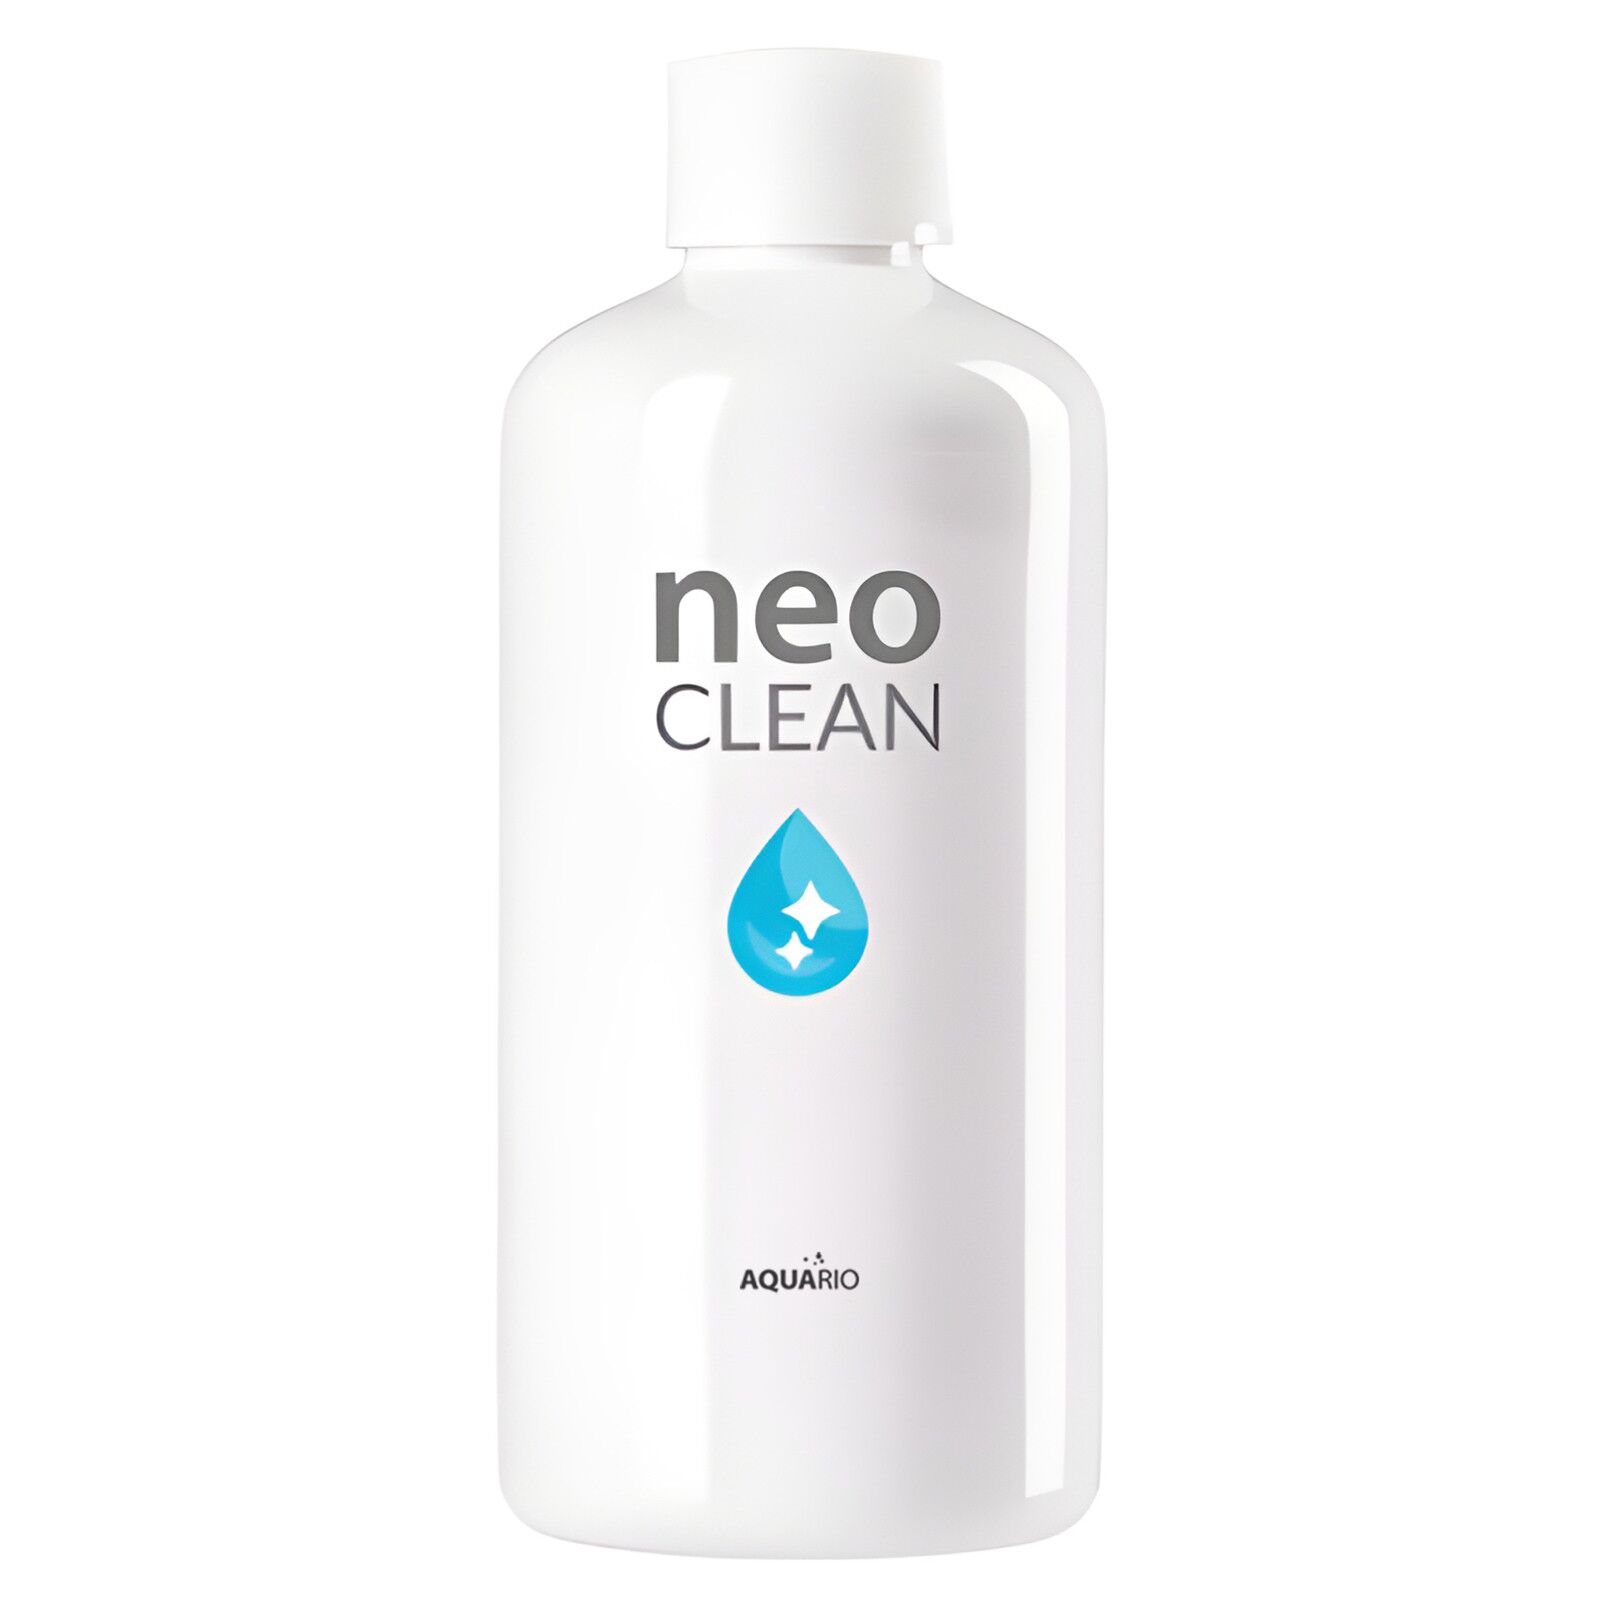 AQUARIO - Neo Clean - Wasseraufbereiter